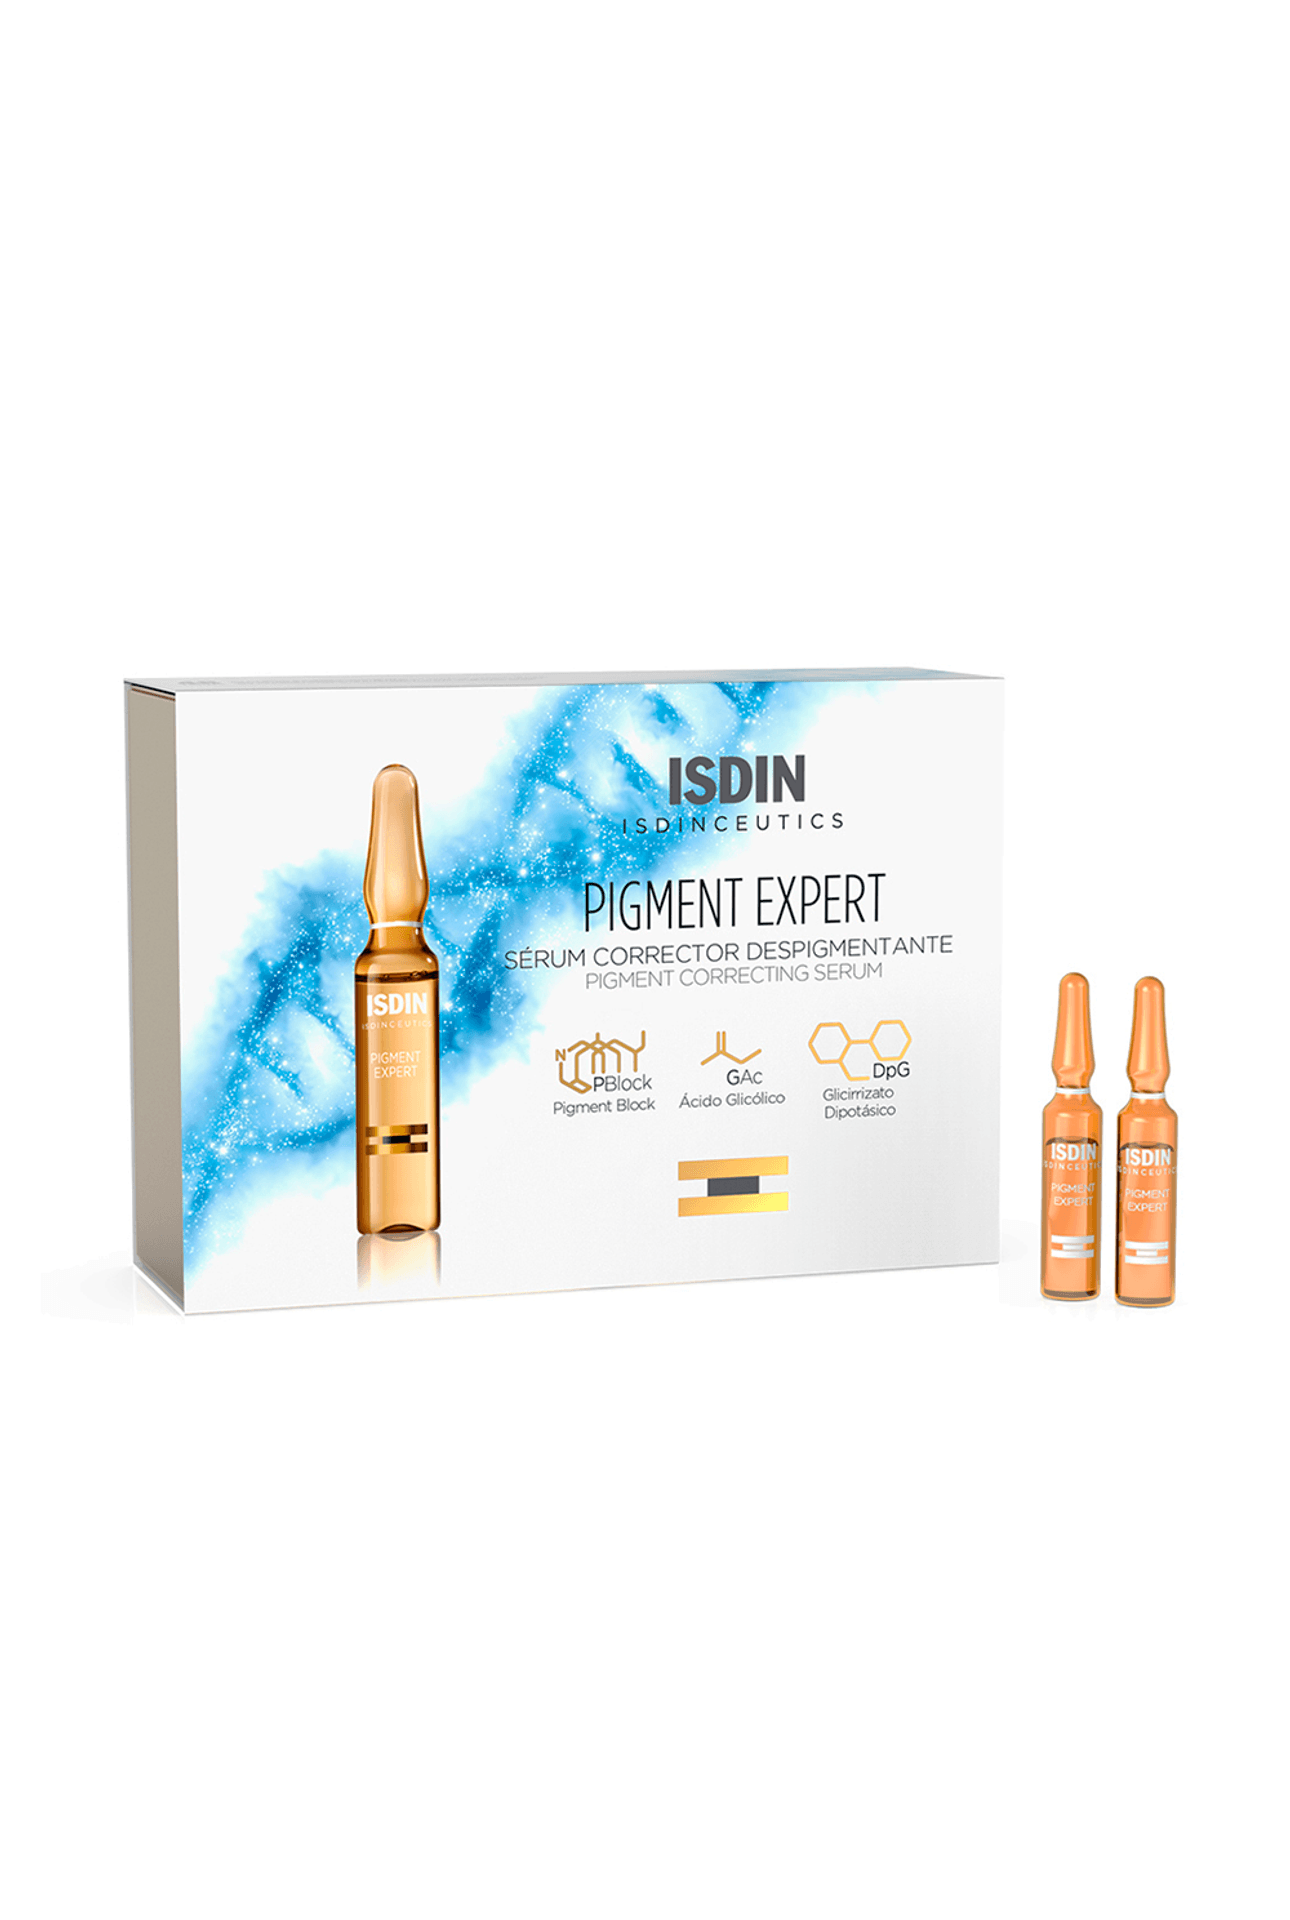 Isdin-Isdinceutics Pigment Expert Ampollas x 30 unid-8429420157613